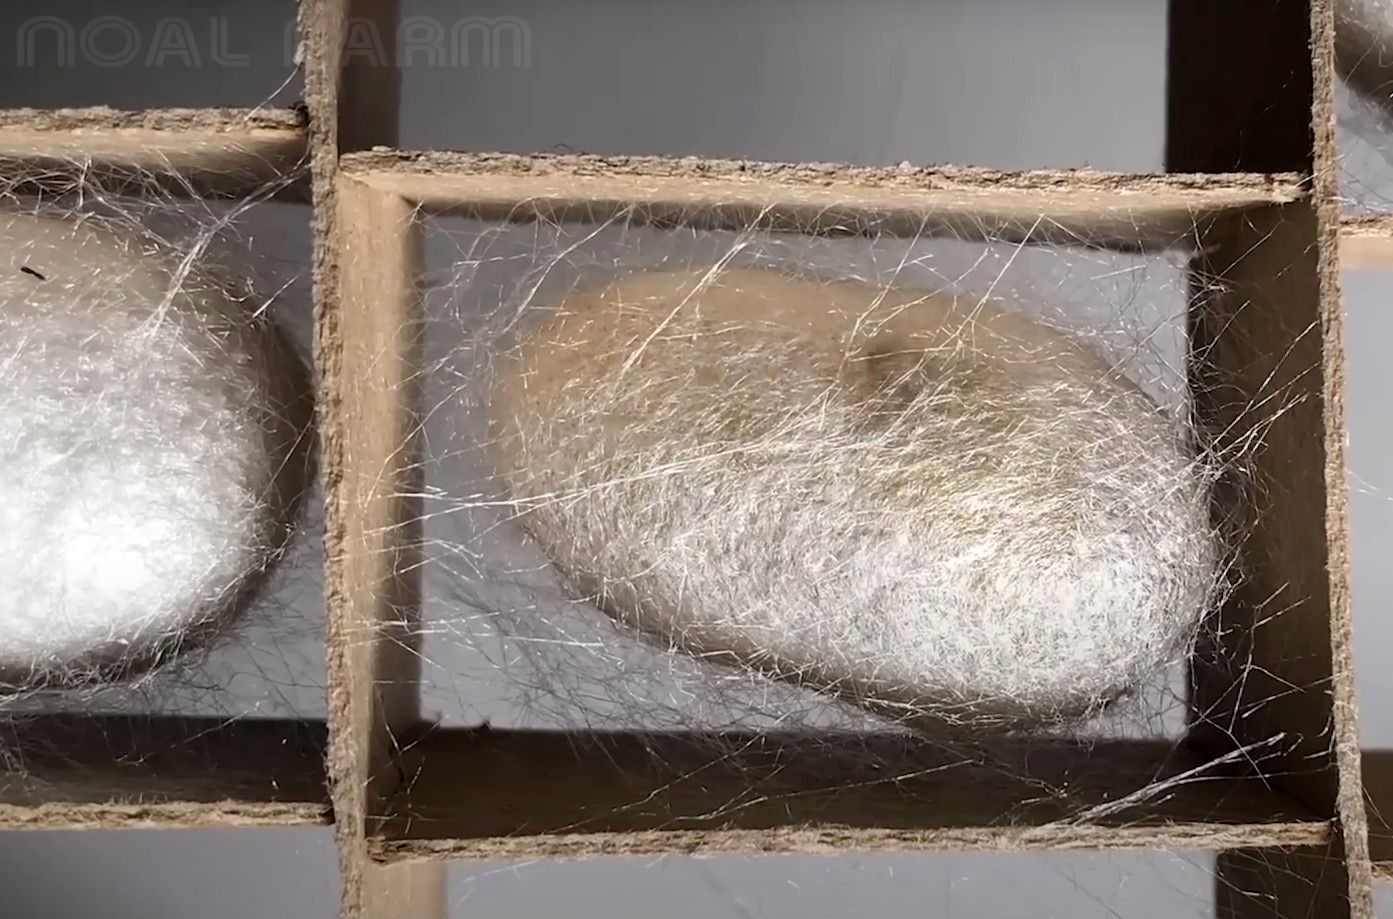 (ویدئو) مراحل پرورش میلیون ها کرم ابریشم در ژاپن؛ فرآوری ابریشم در کارخانه